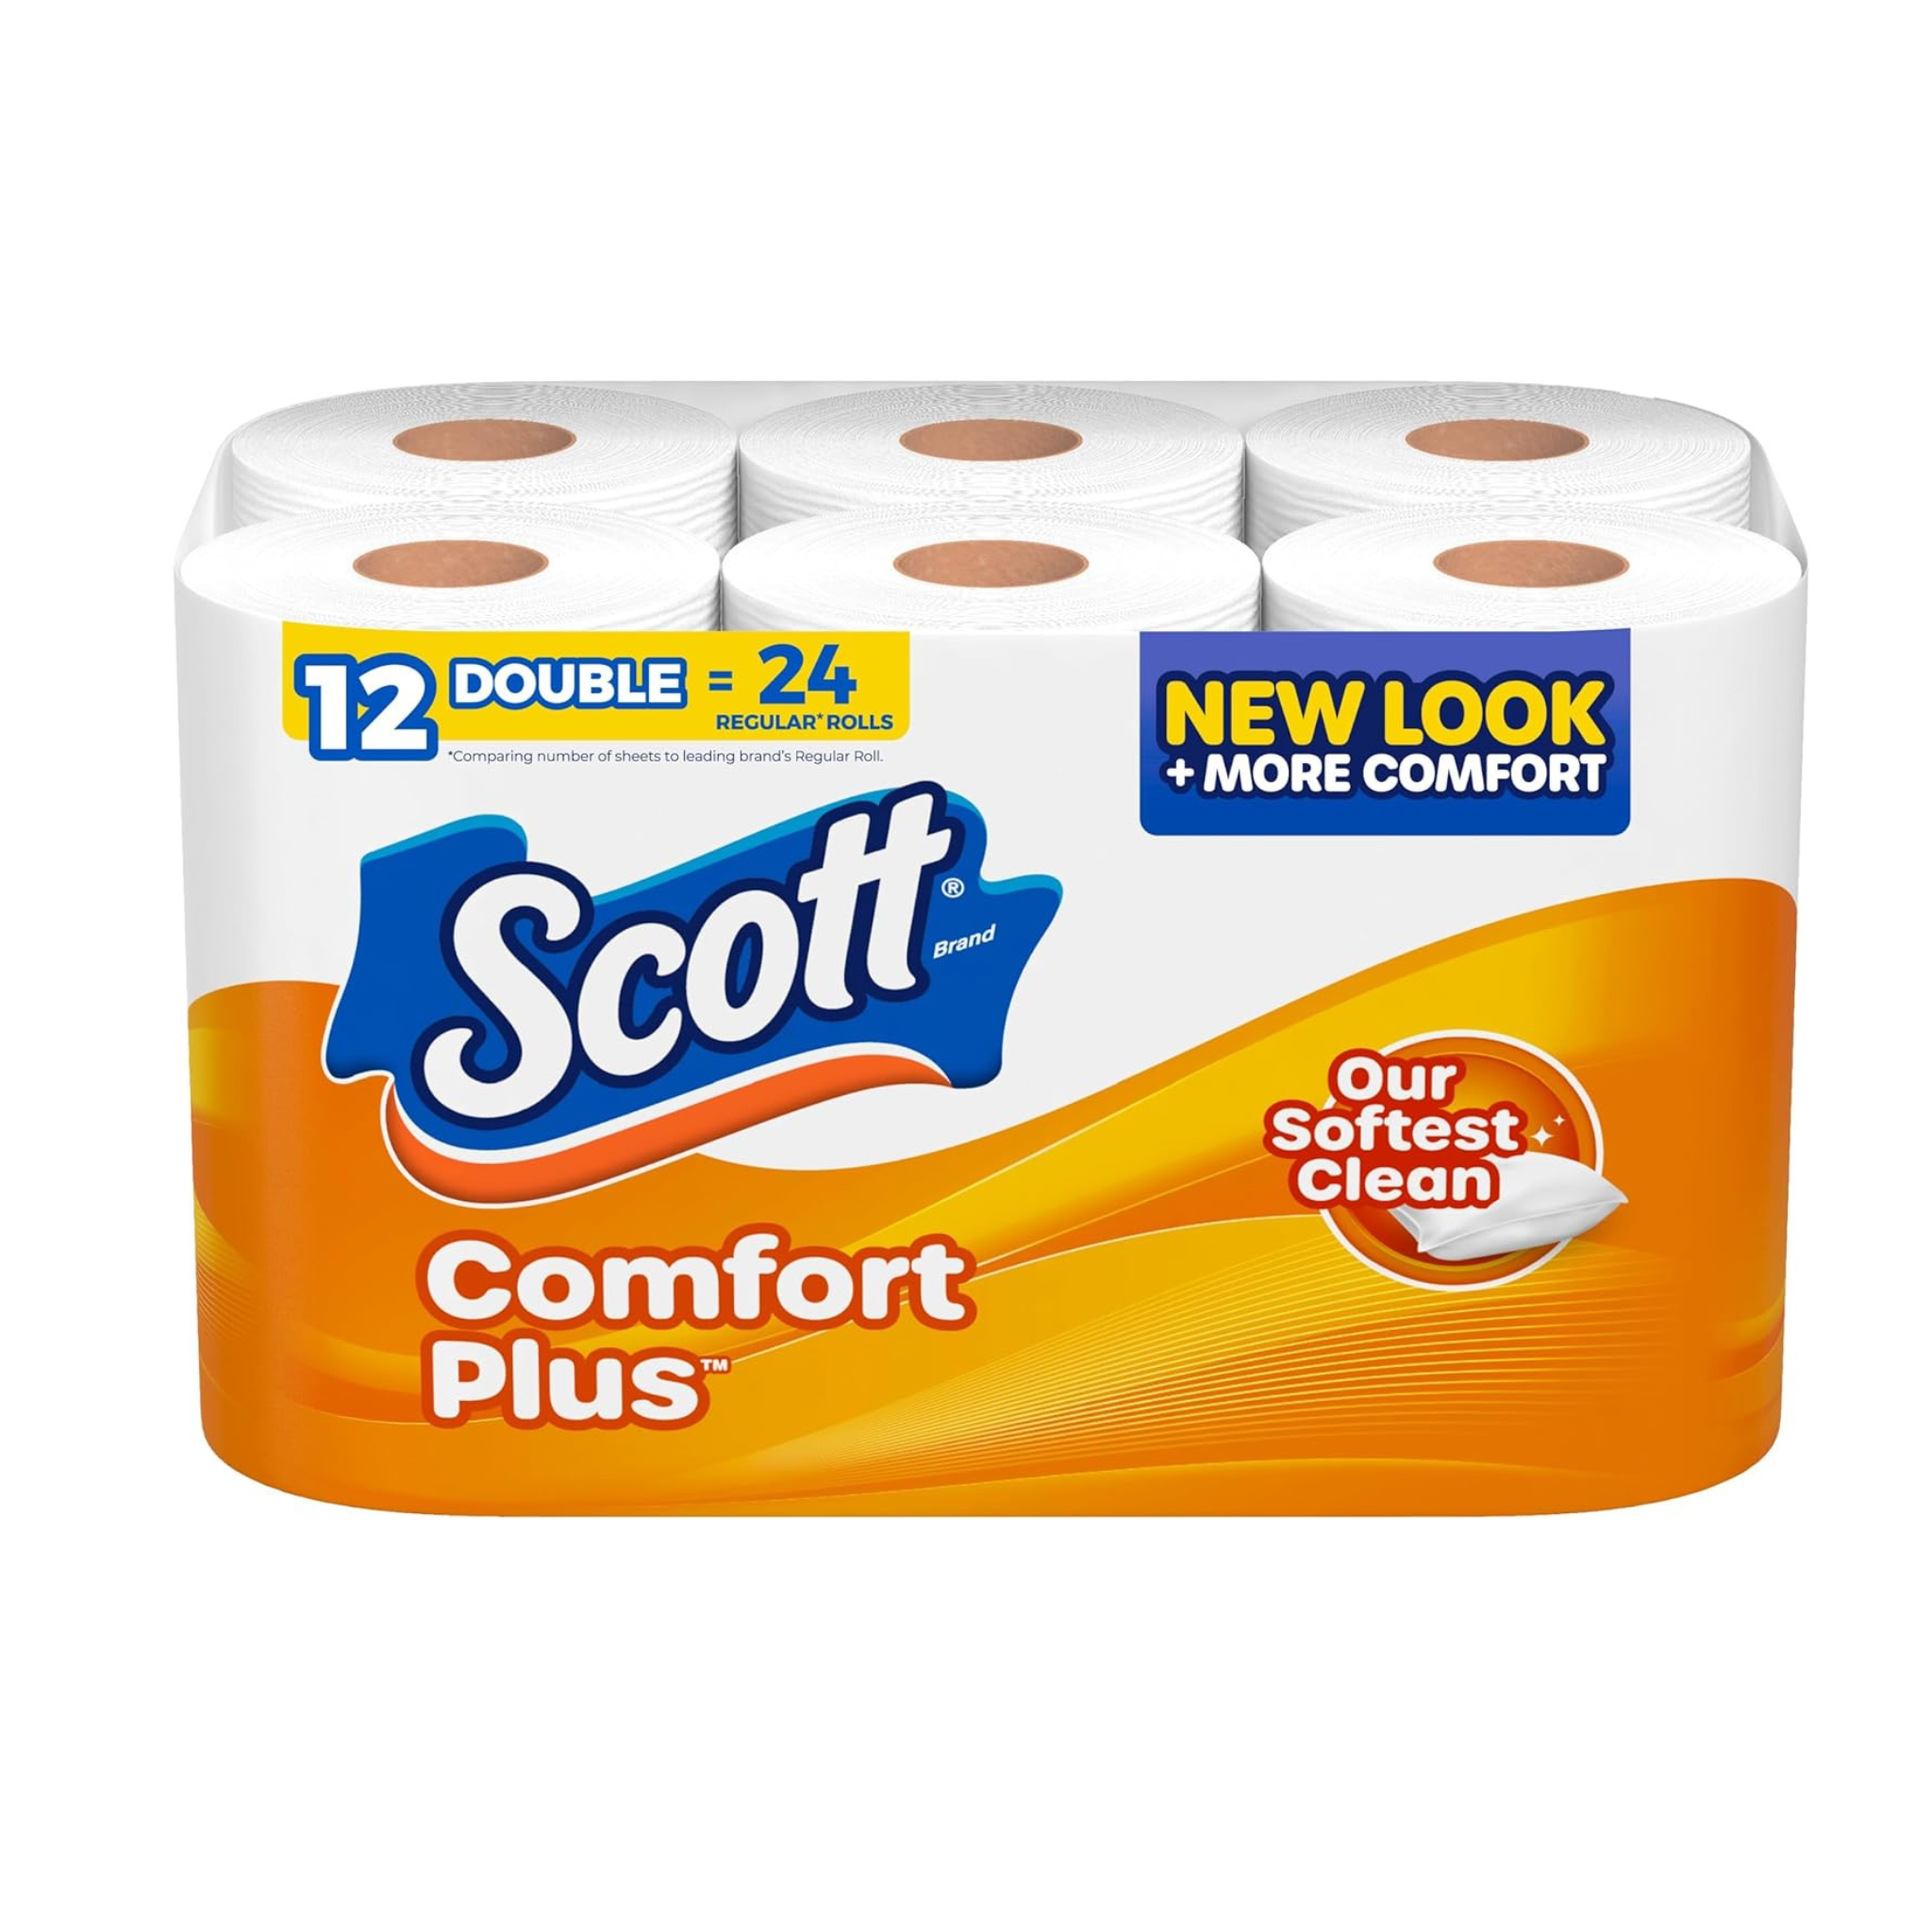 12-Count Scott ComfortPlus 1-Ply Double Roll Toilet Paper